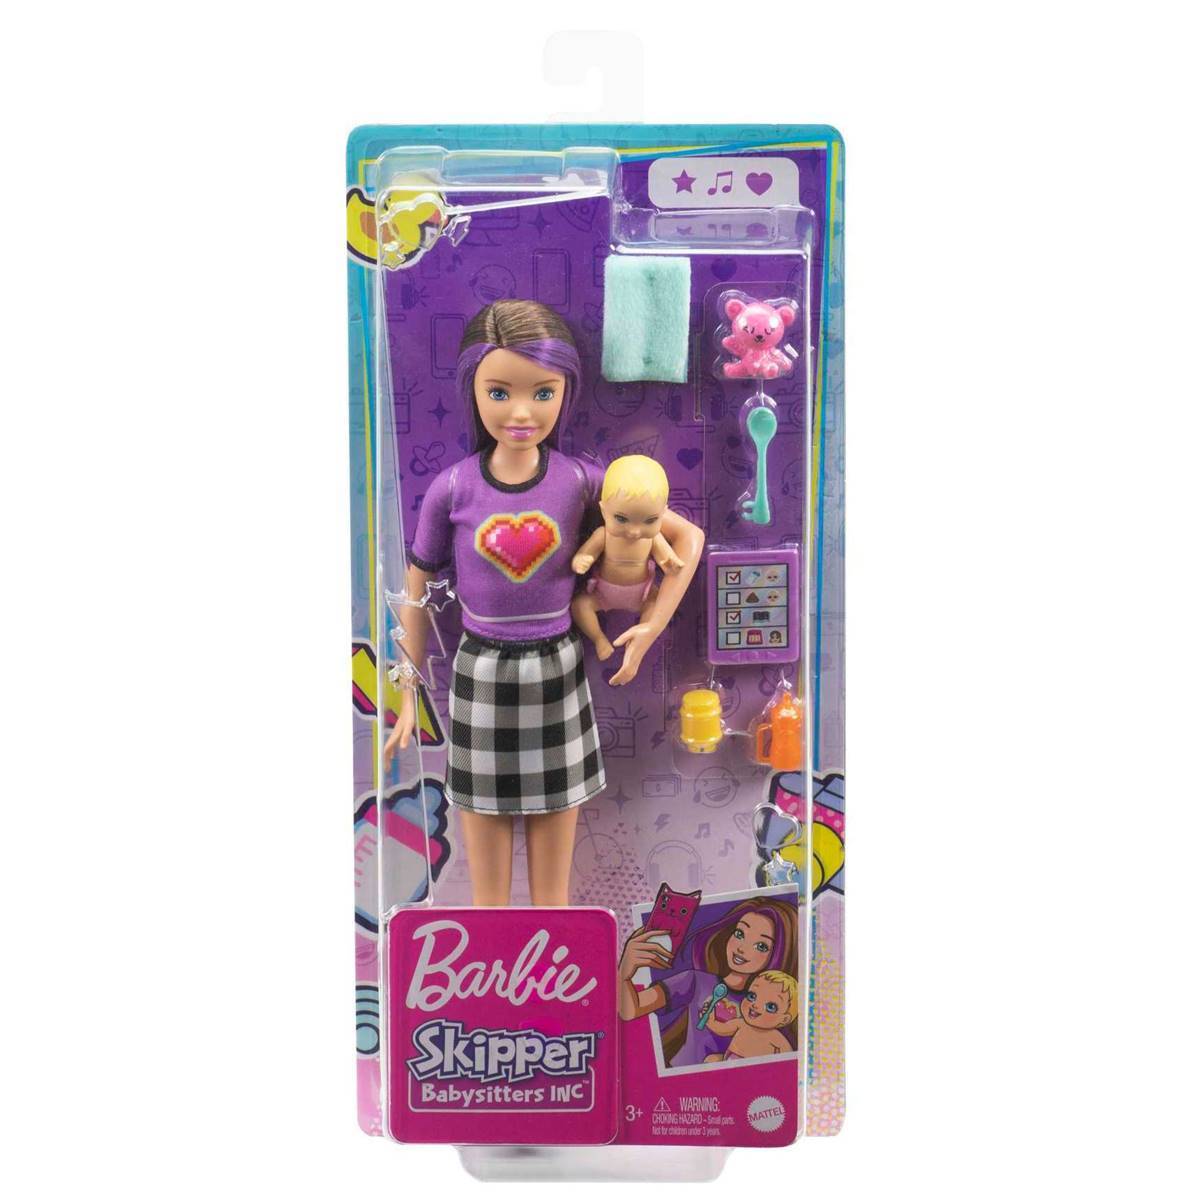 Barbie(R) Skipper Babysitters Doll & Accessory Set